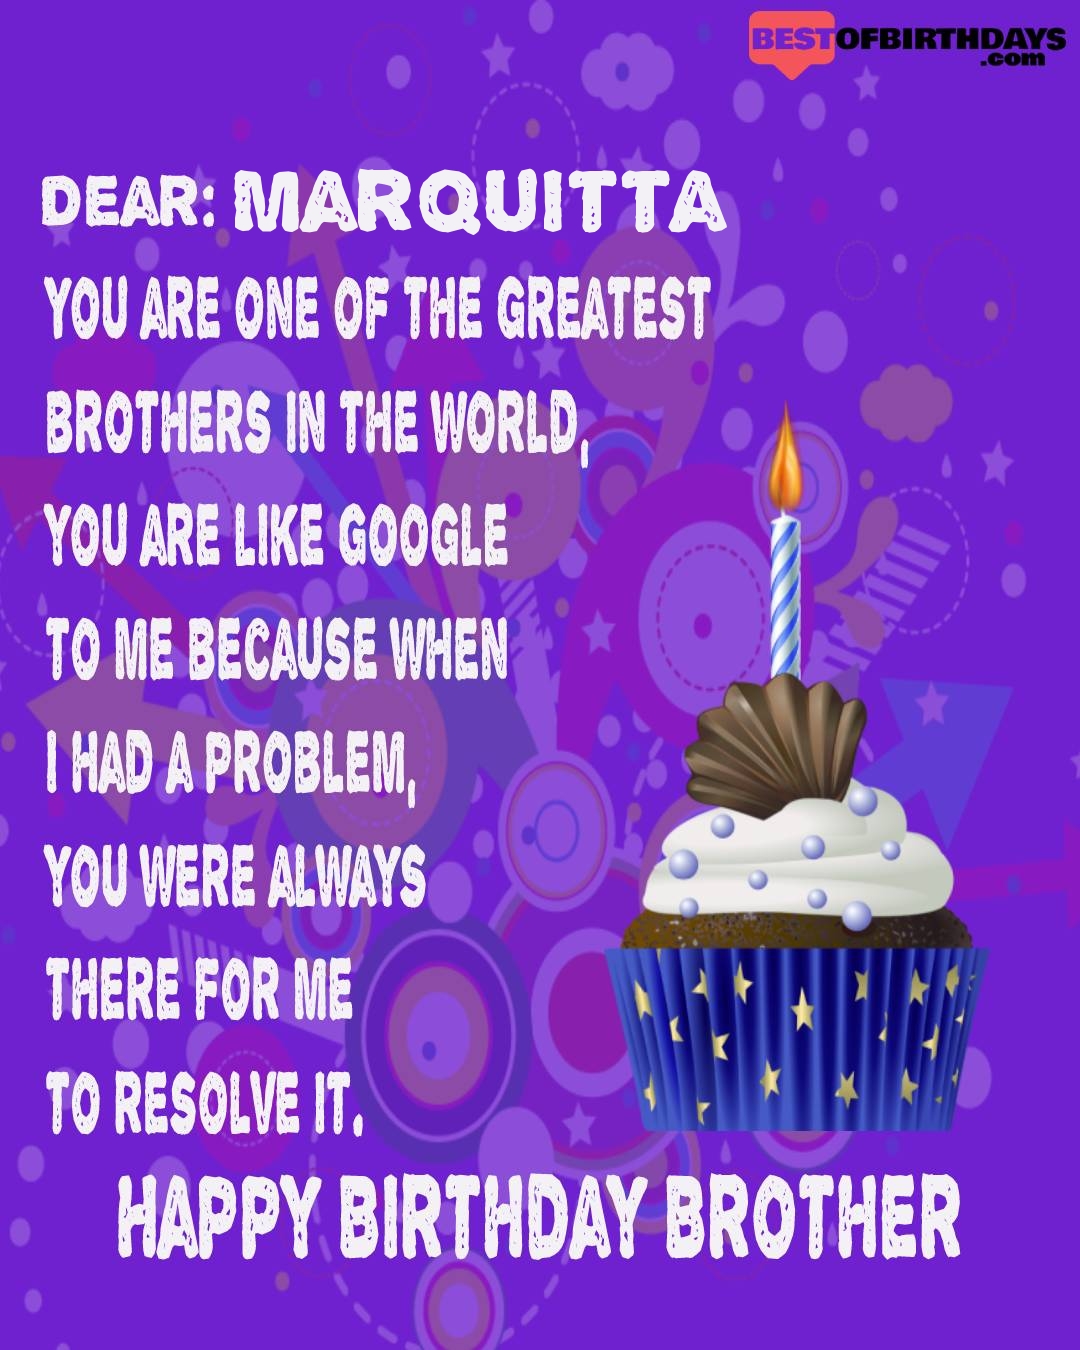 Happy birthday marquitta bhai brother bro